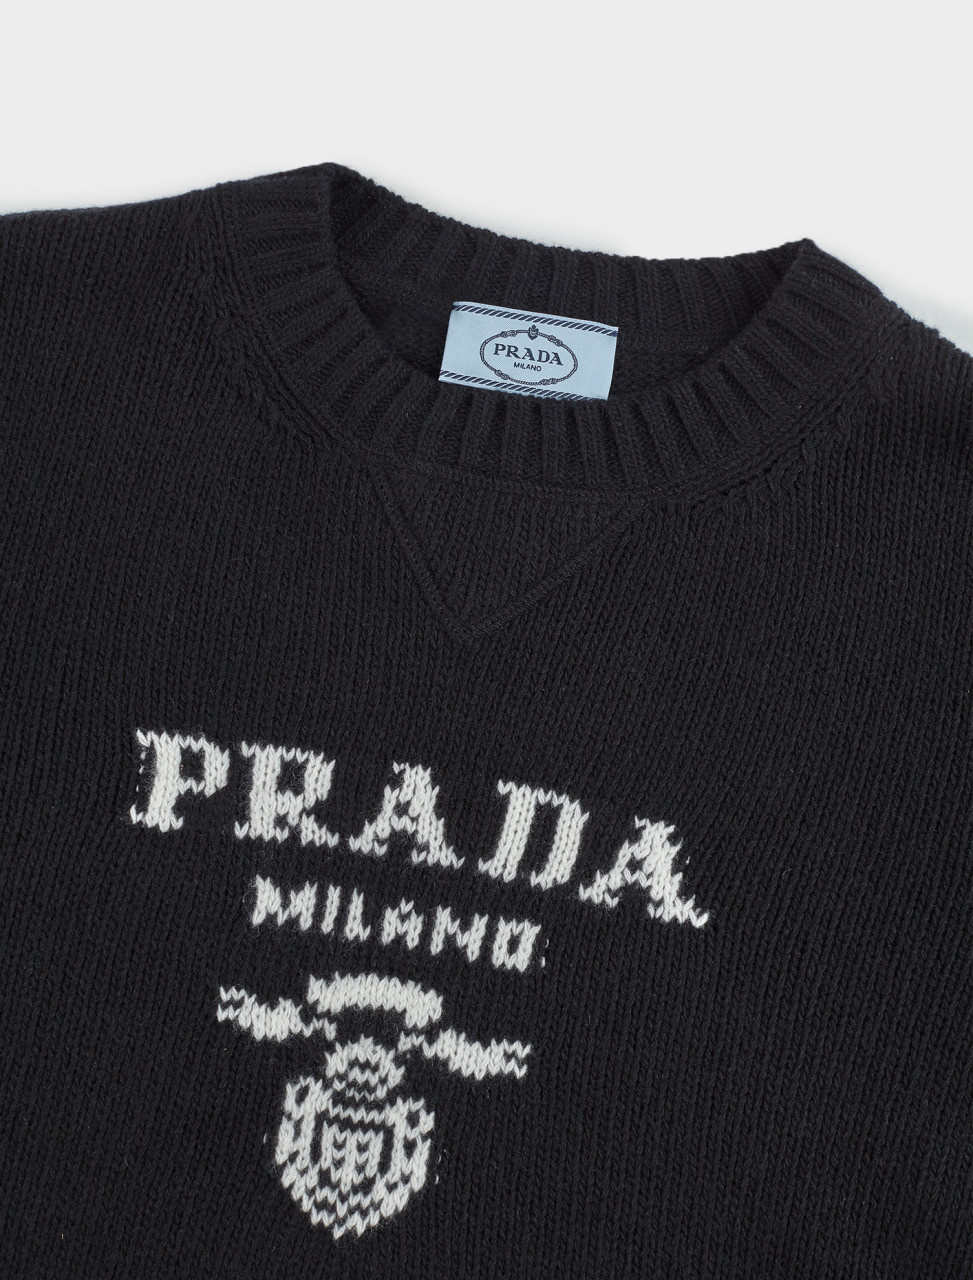 Prada Round Neck Logo Knit in Black | Voo Store Berlin | Worldwide Shipping